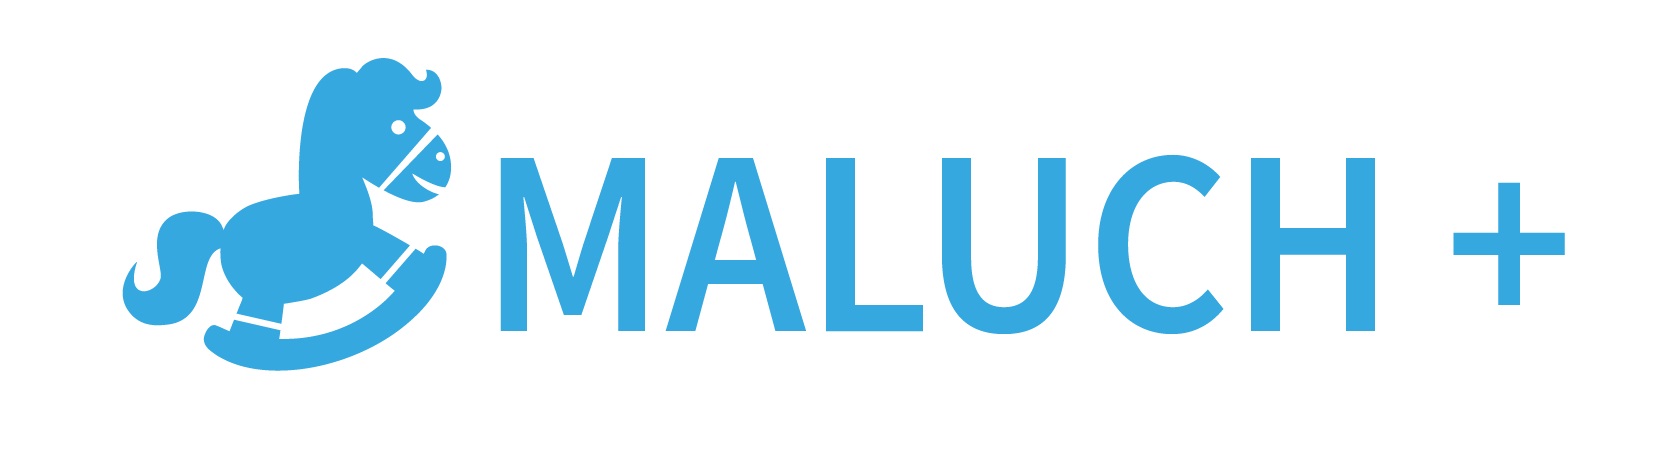 Logo programu Maluch +